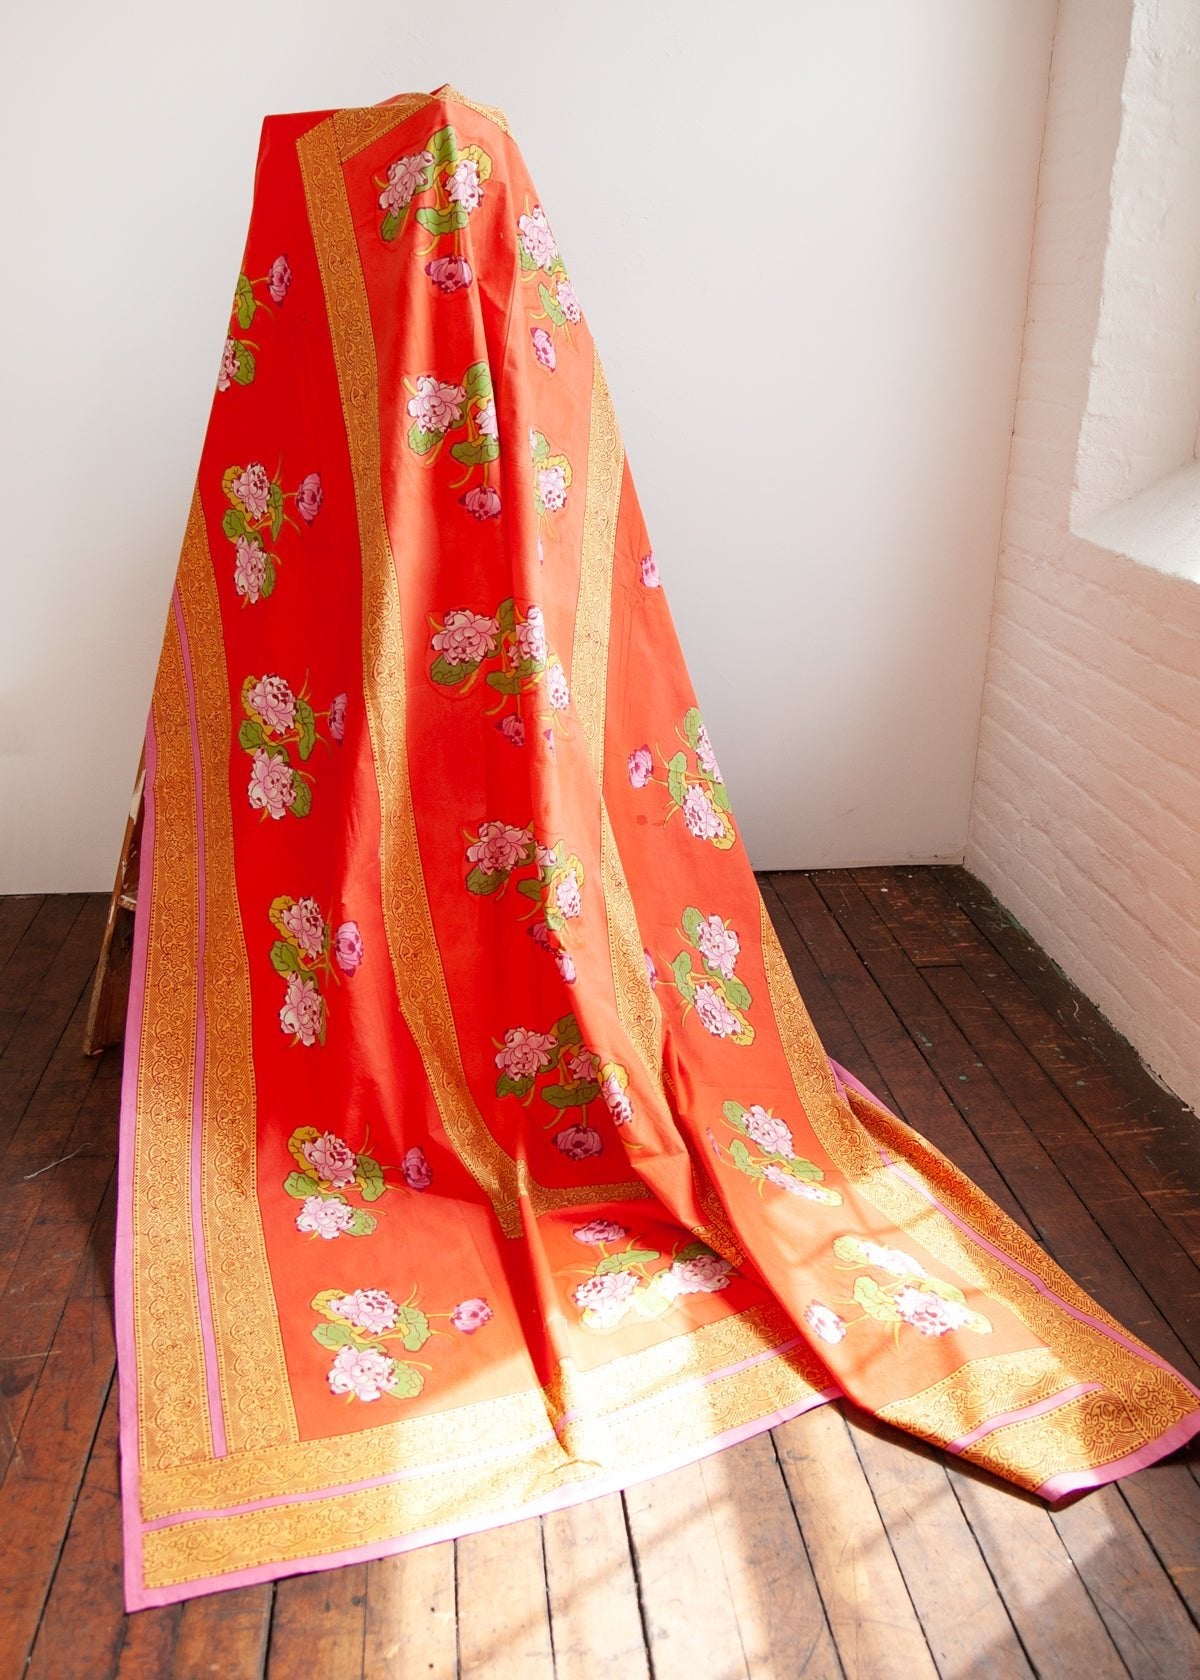 Lisa Corti Tablecloth Tea Flower